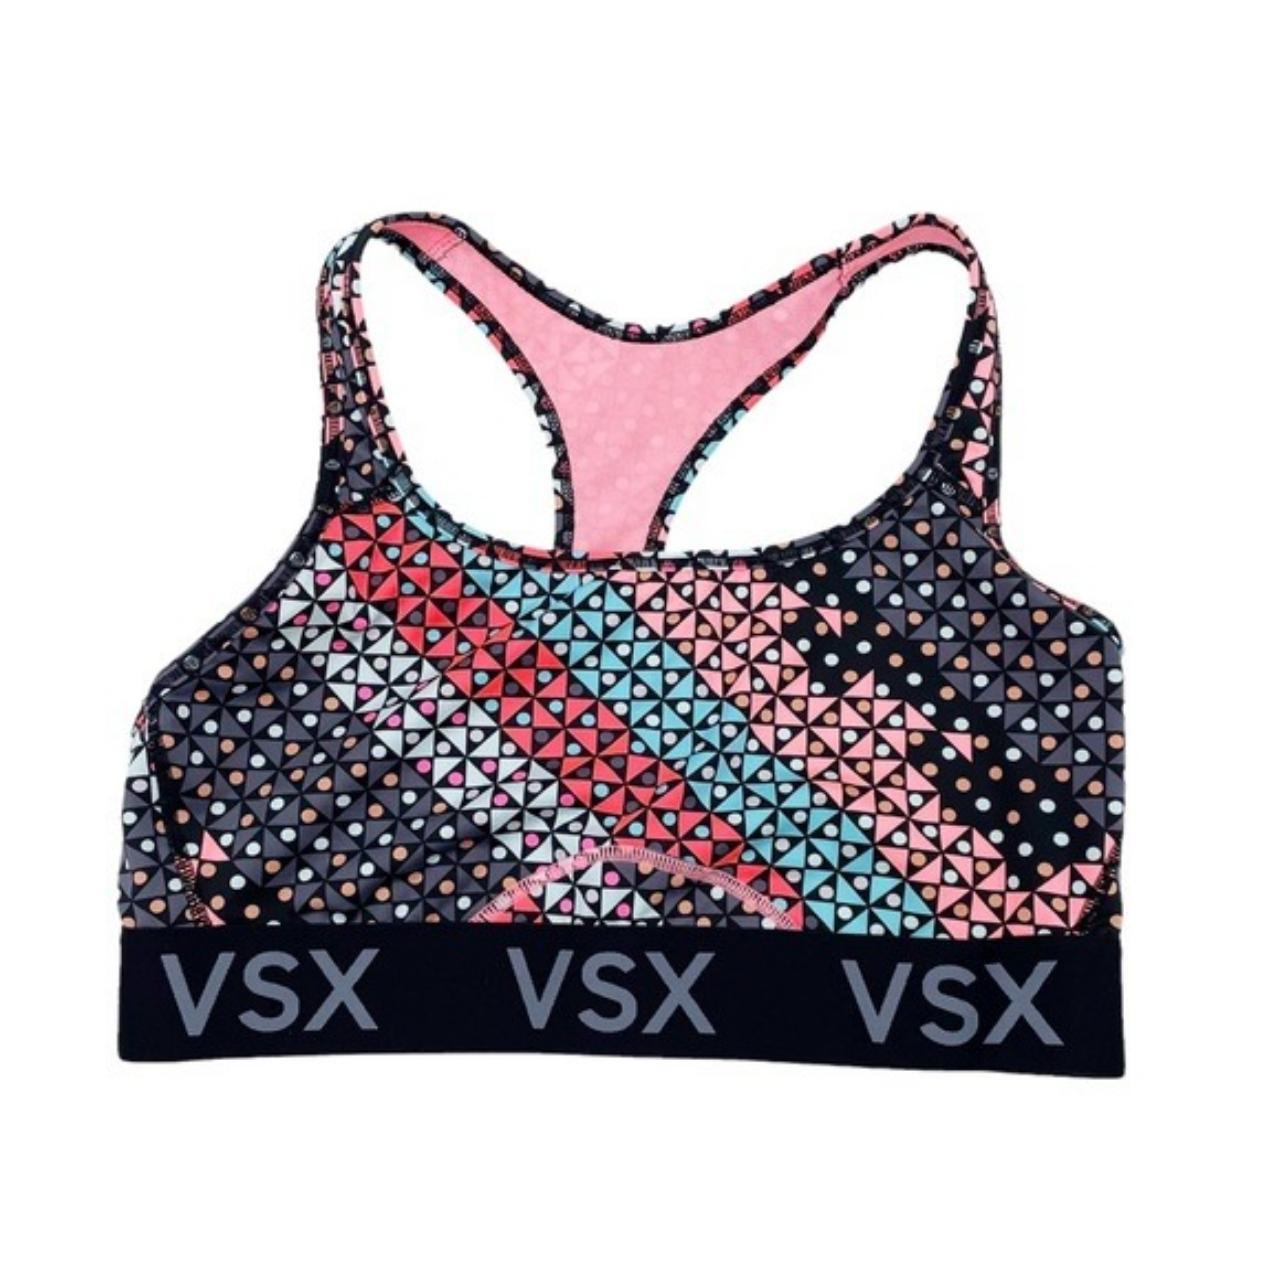 Victoria's Secret VSX Sport The Player Racerback - Depop